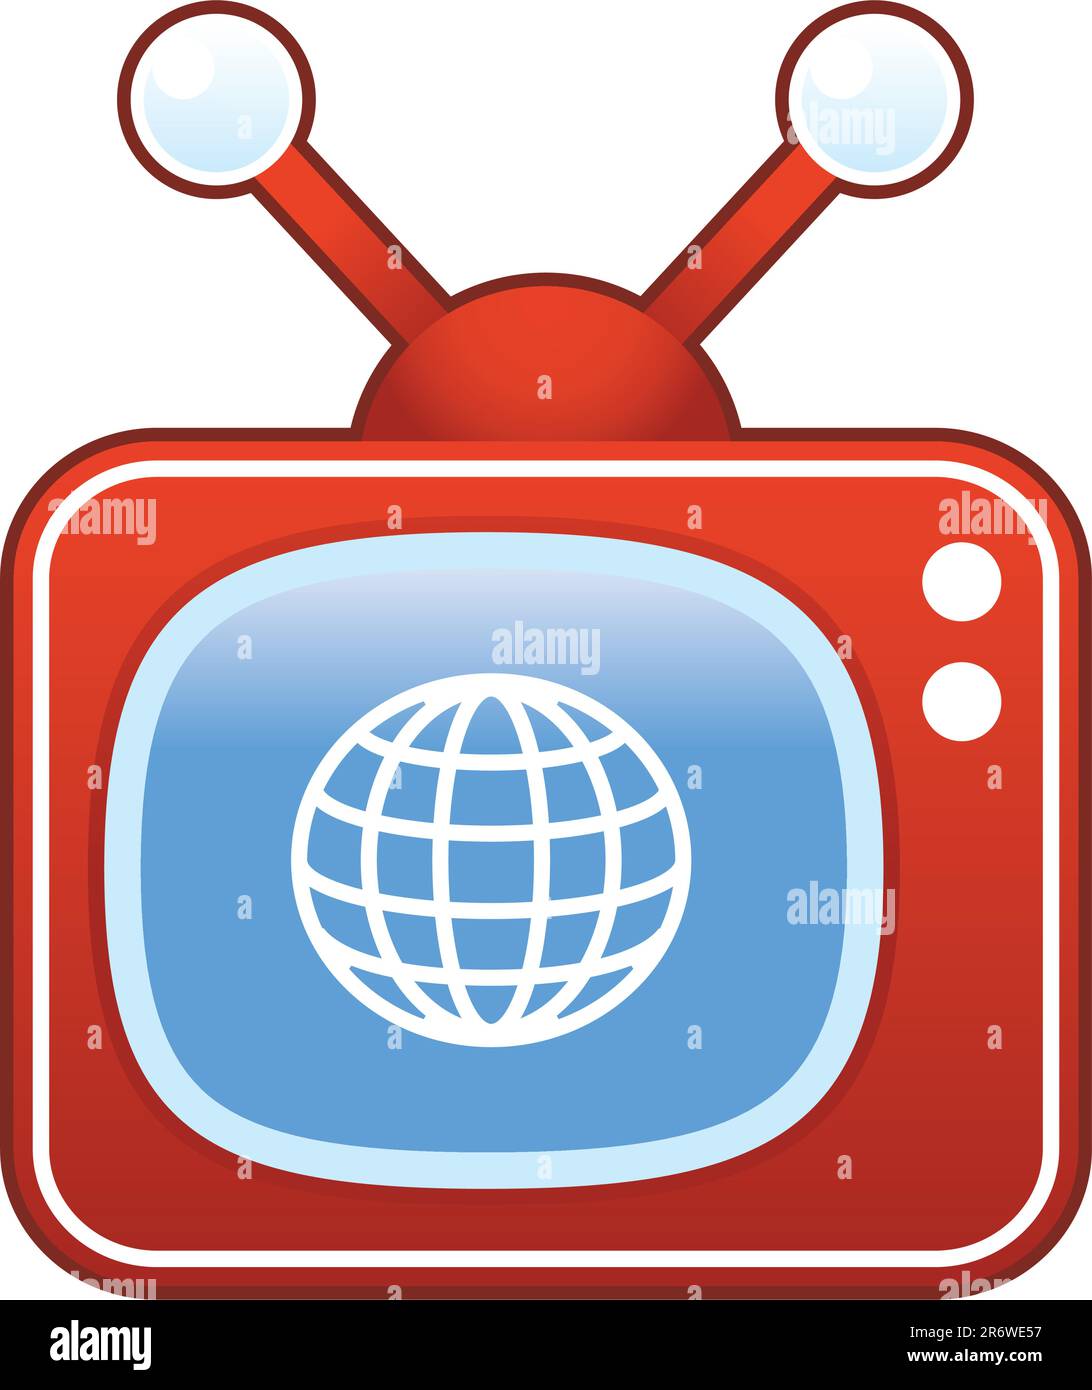 Globe or international icon on retro television set Stock Vector